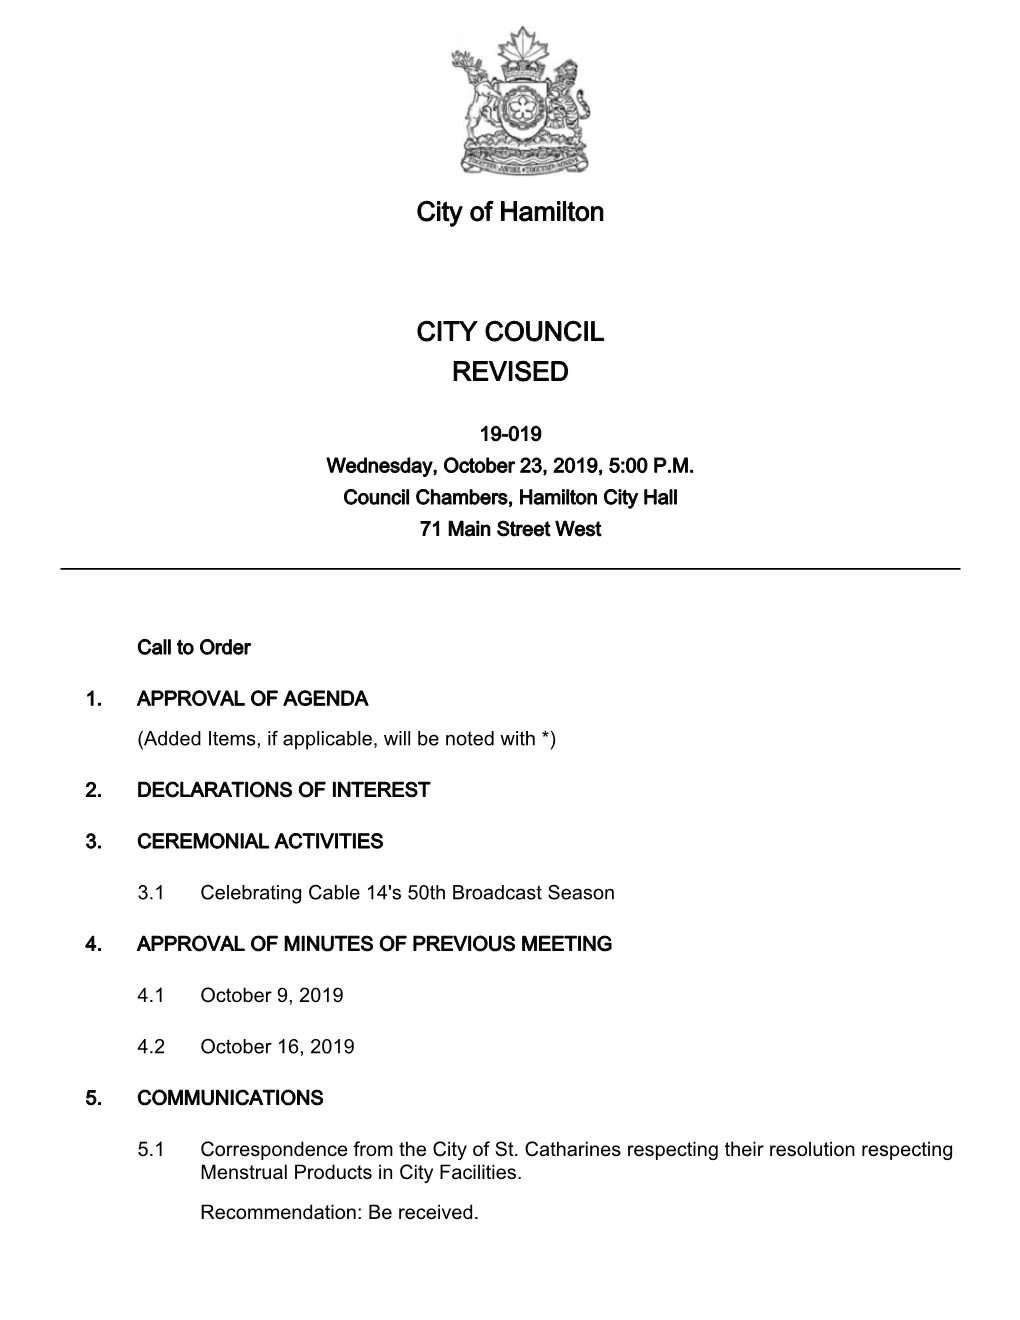 City of Hamilton Agenda Package